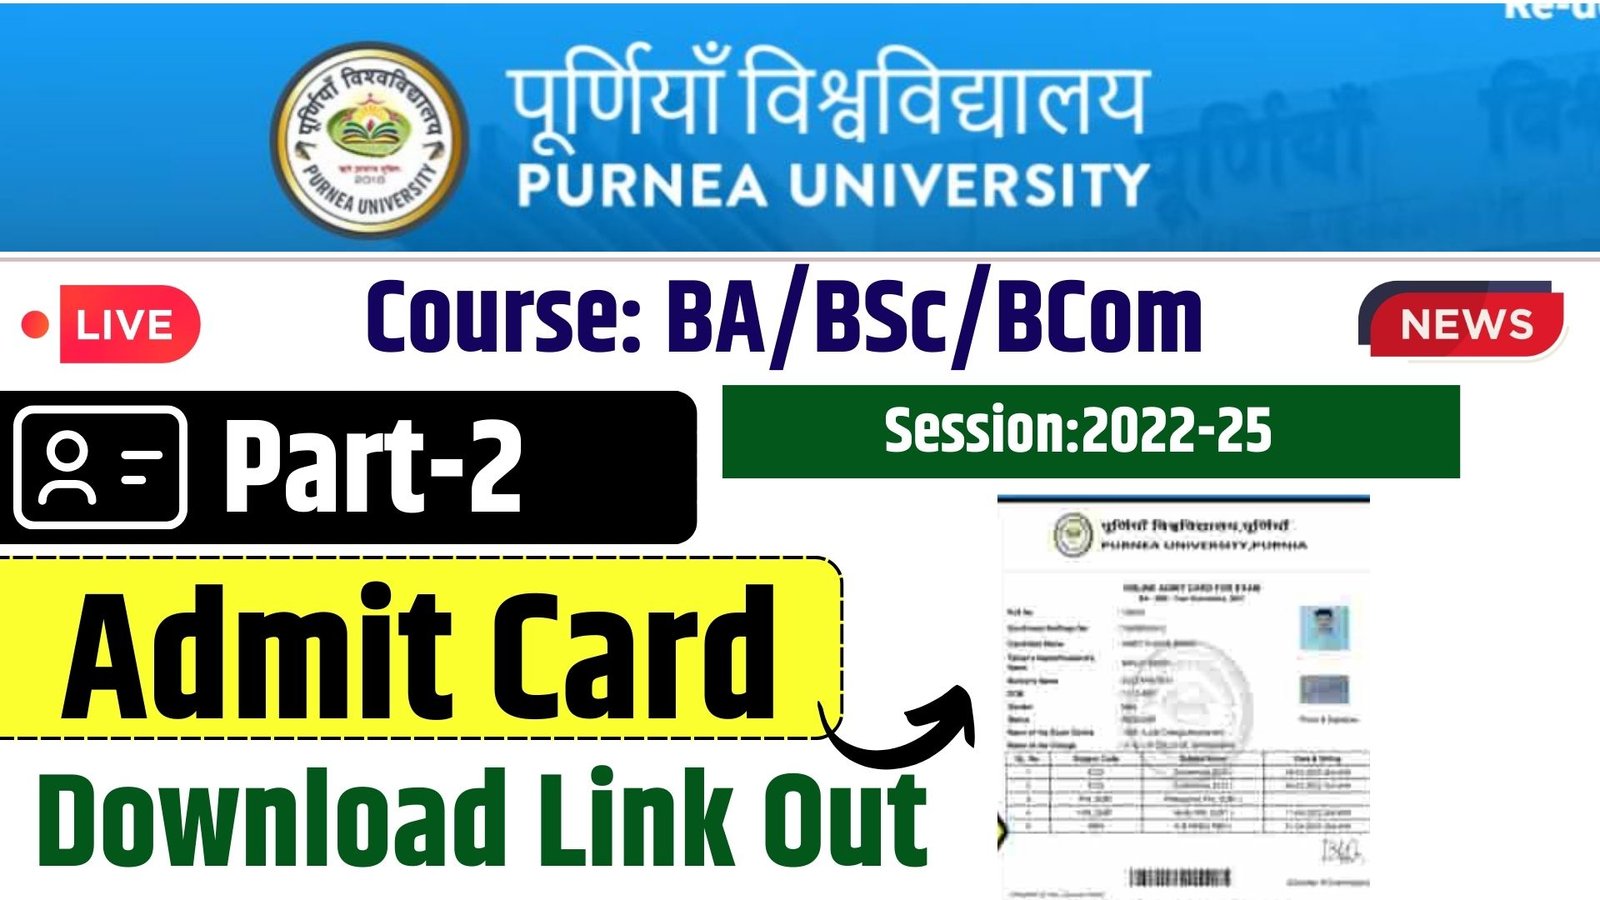 Purnea University Part 2 Admit Card 2022-25 Download Link Out